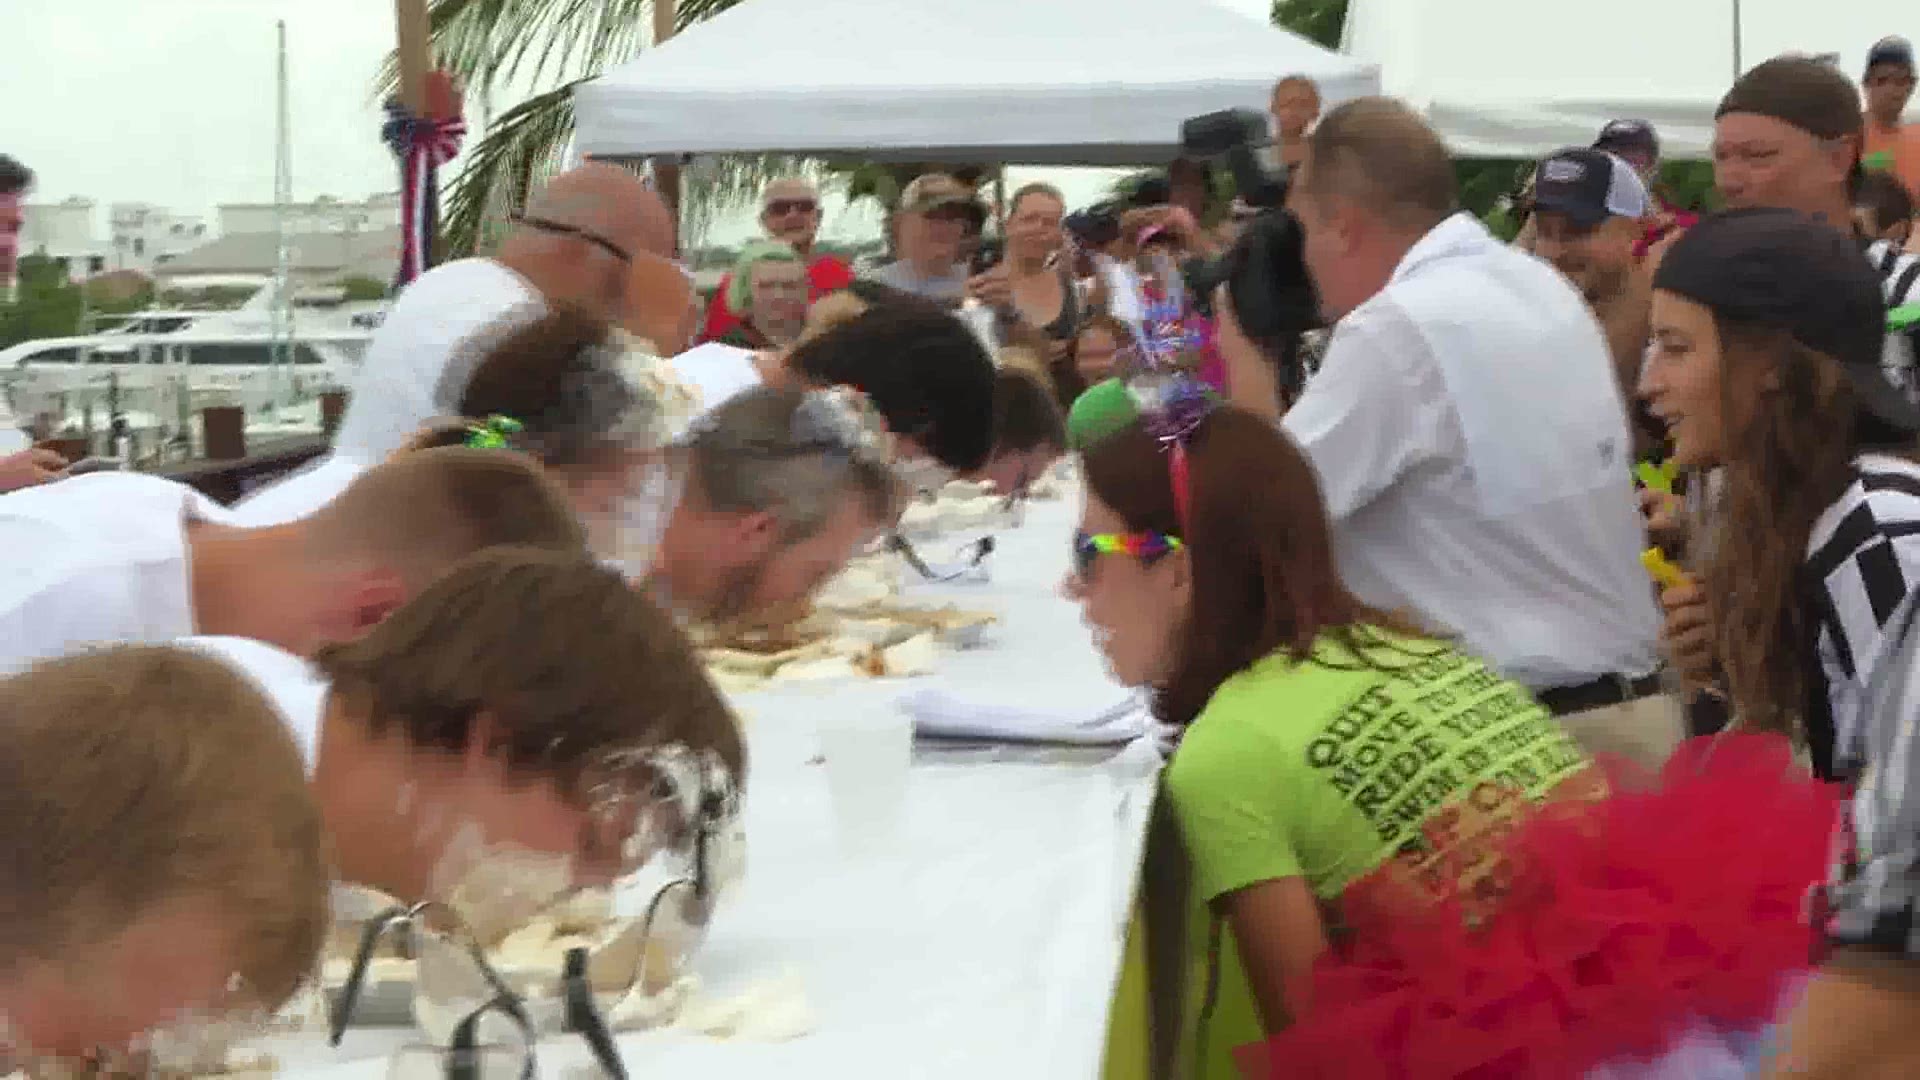 Key West Key Lime Pie Eating Contest. VIDEO: Key West News Service